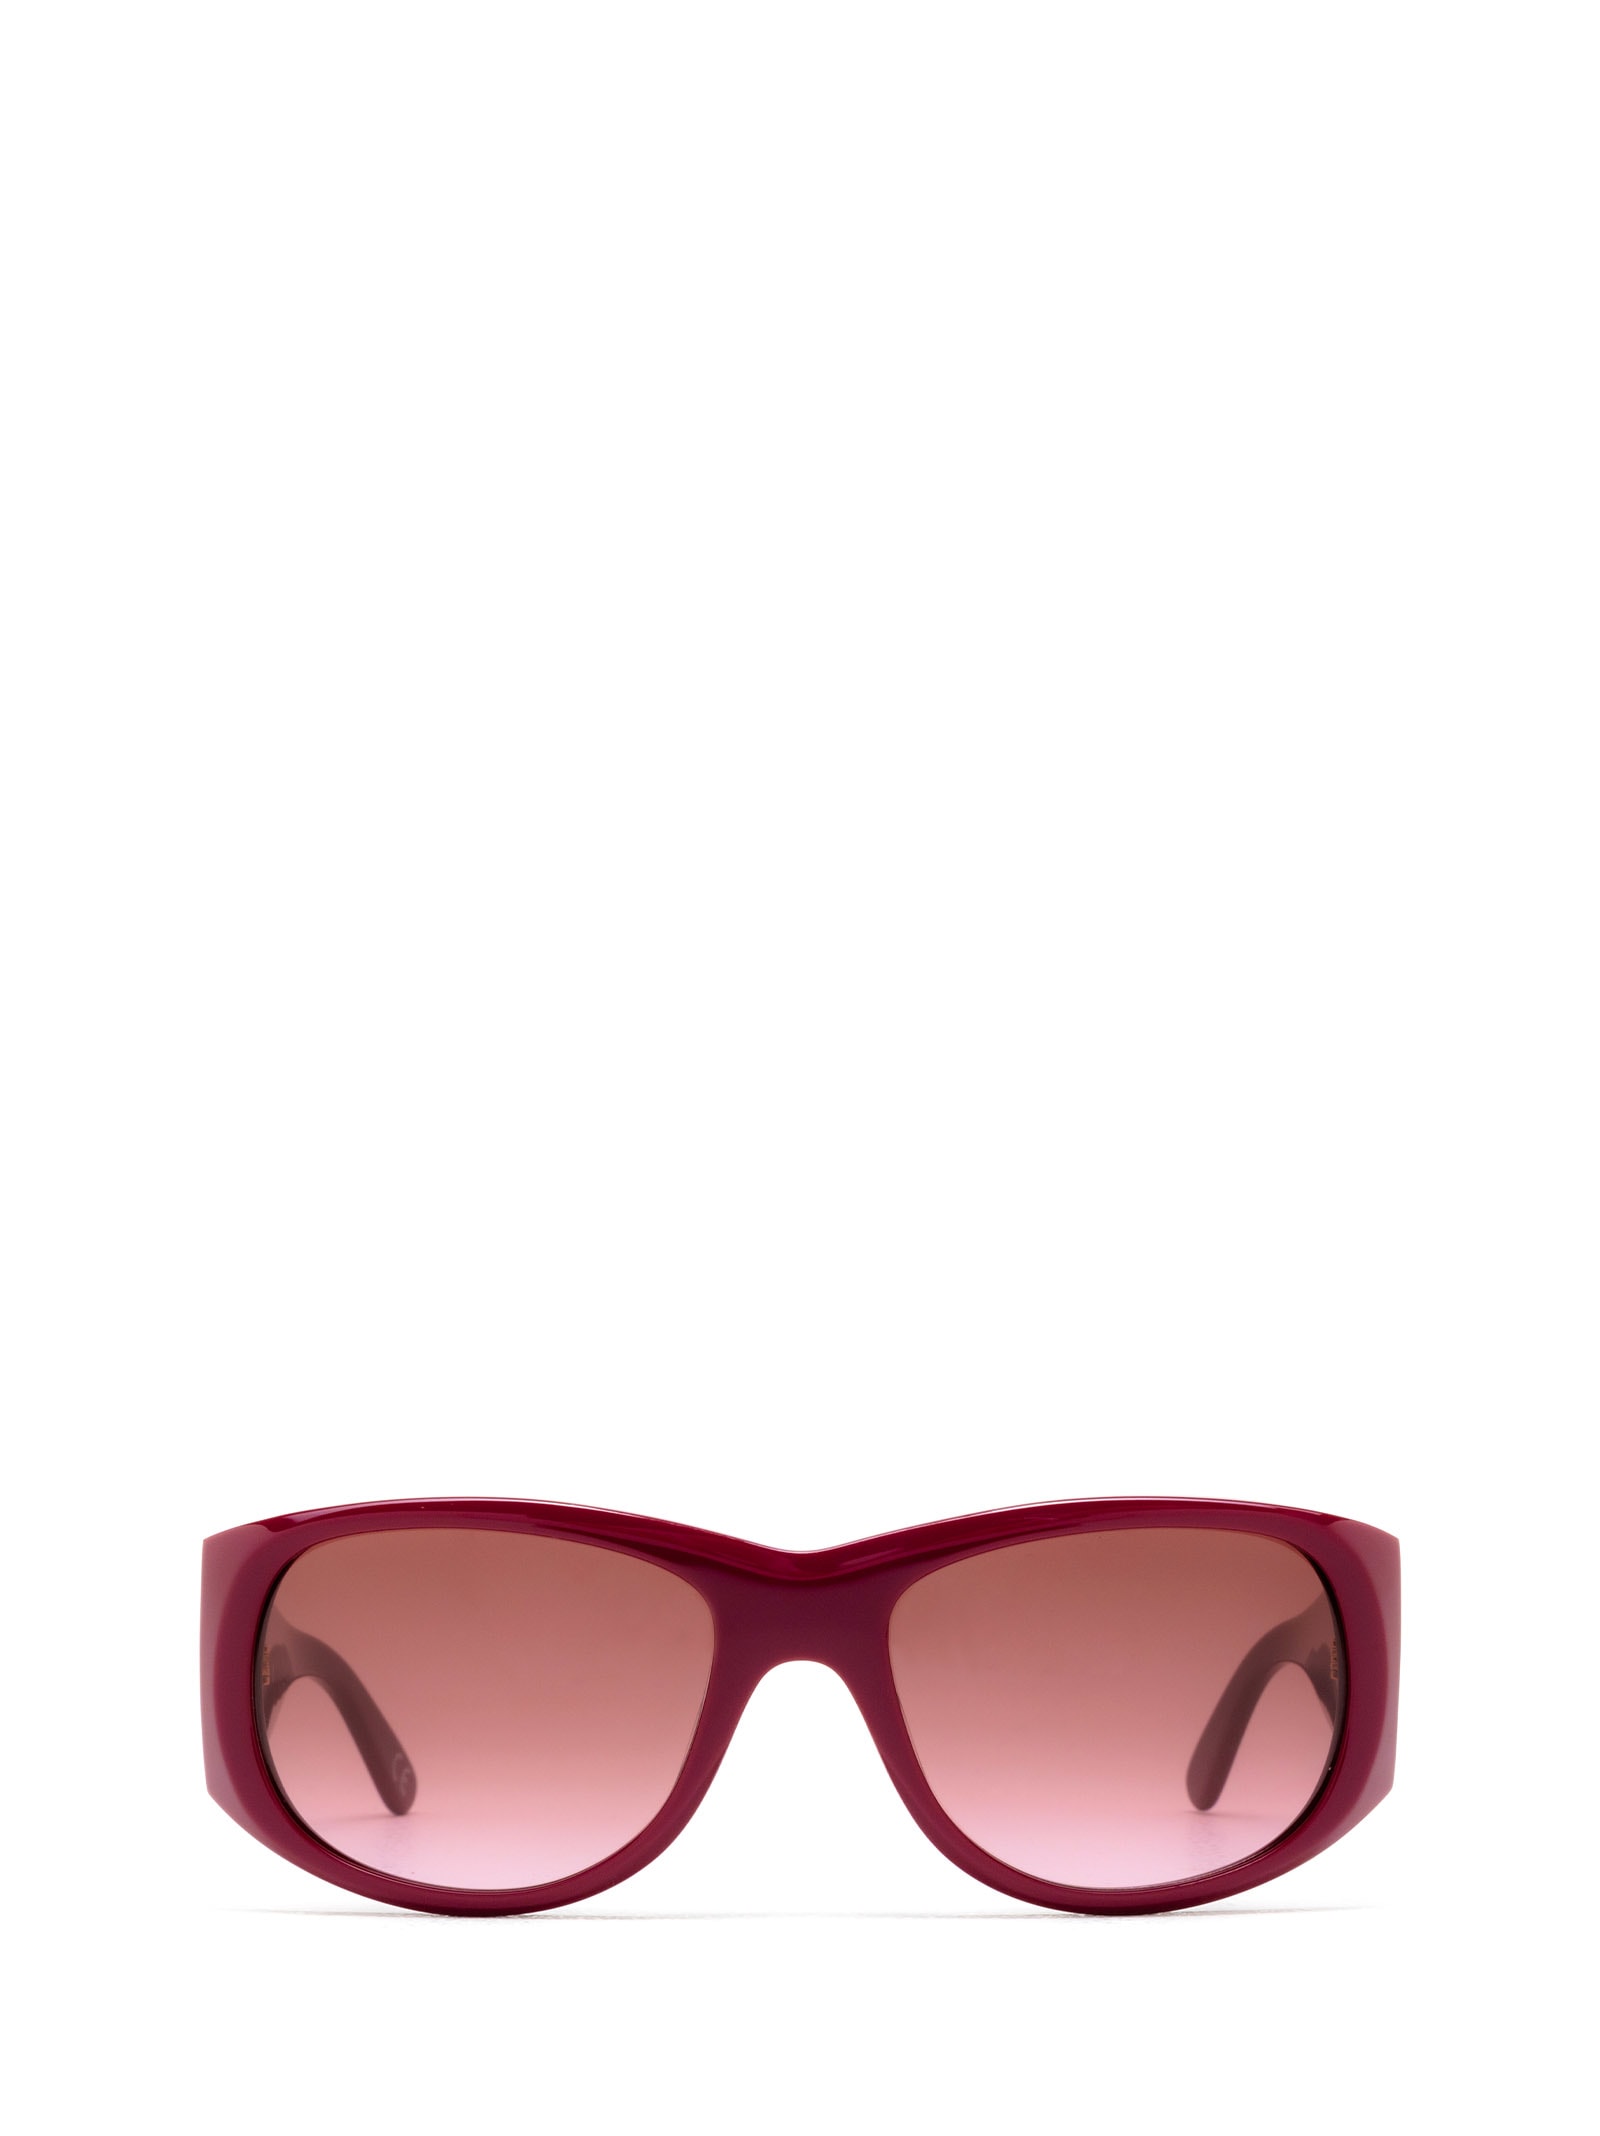 Marni Eyewear Orinoco River Bordeaux Sunglasses